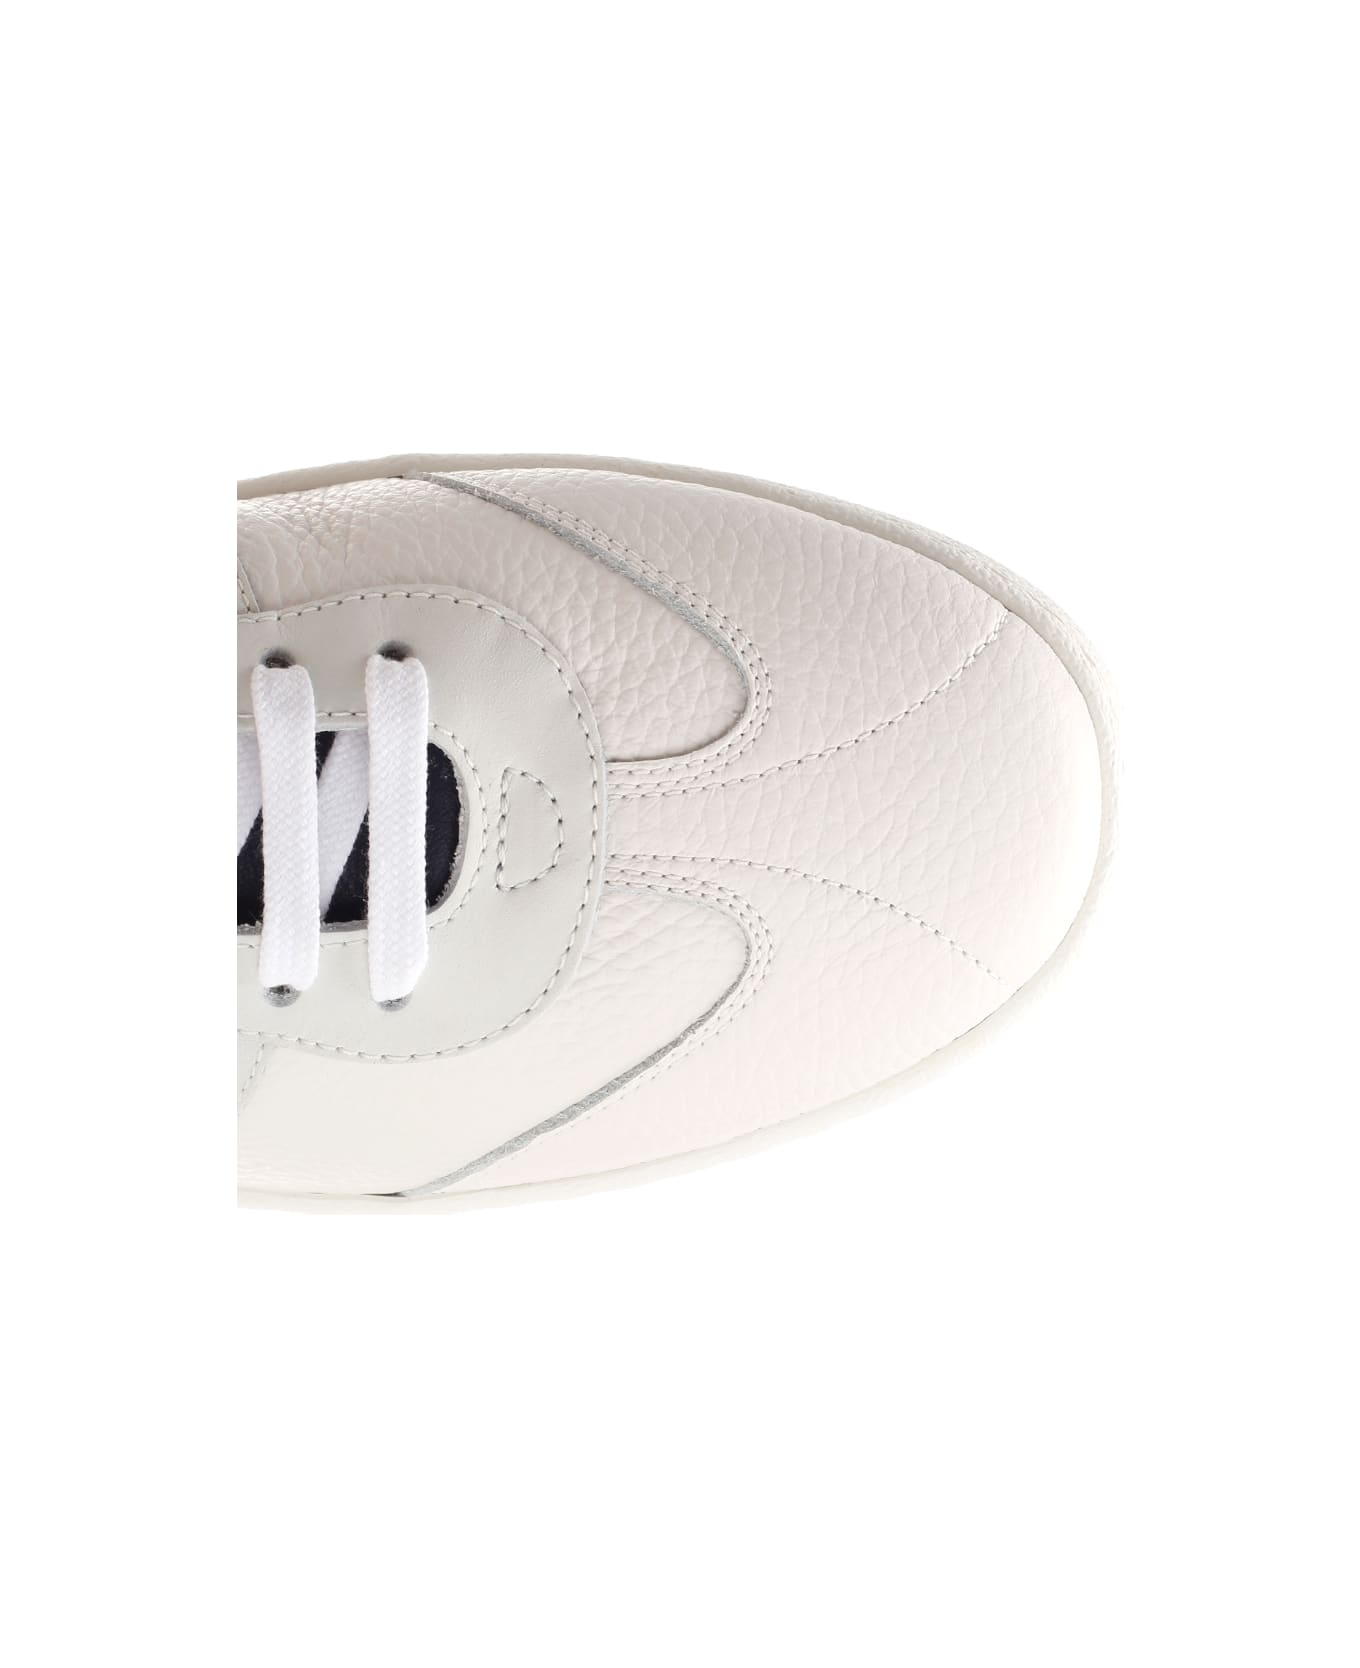 Ferragamo White Sneakers With Blue Heel Tab - WHITE スニーカー